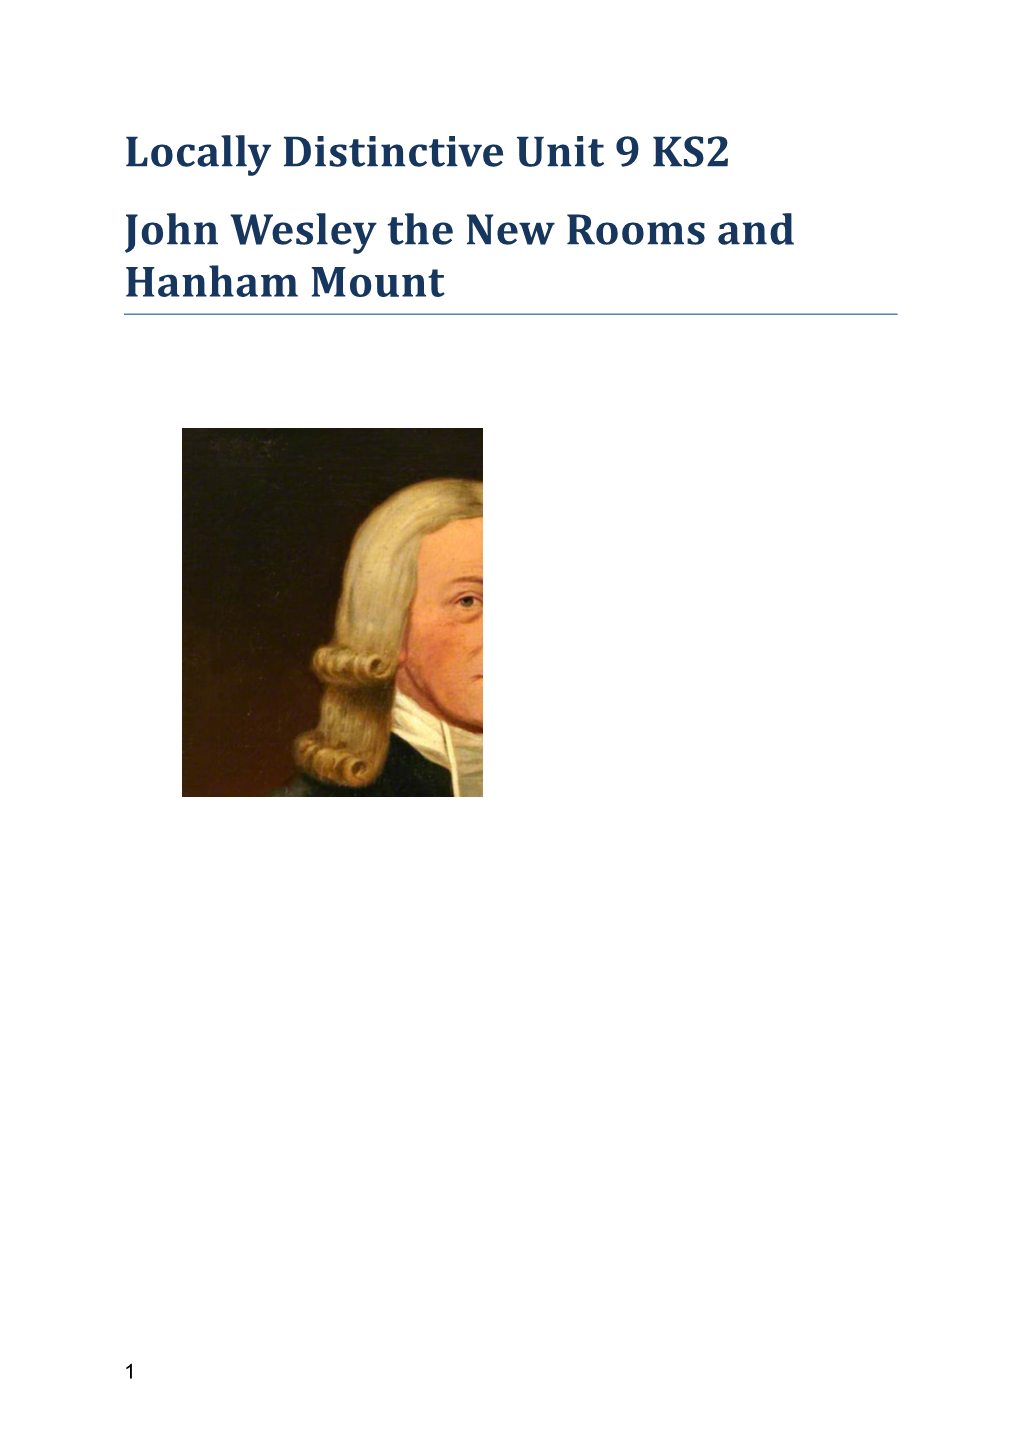 John Wesley the New Rooms and Hanham Mount